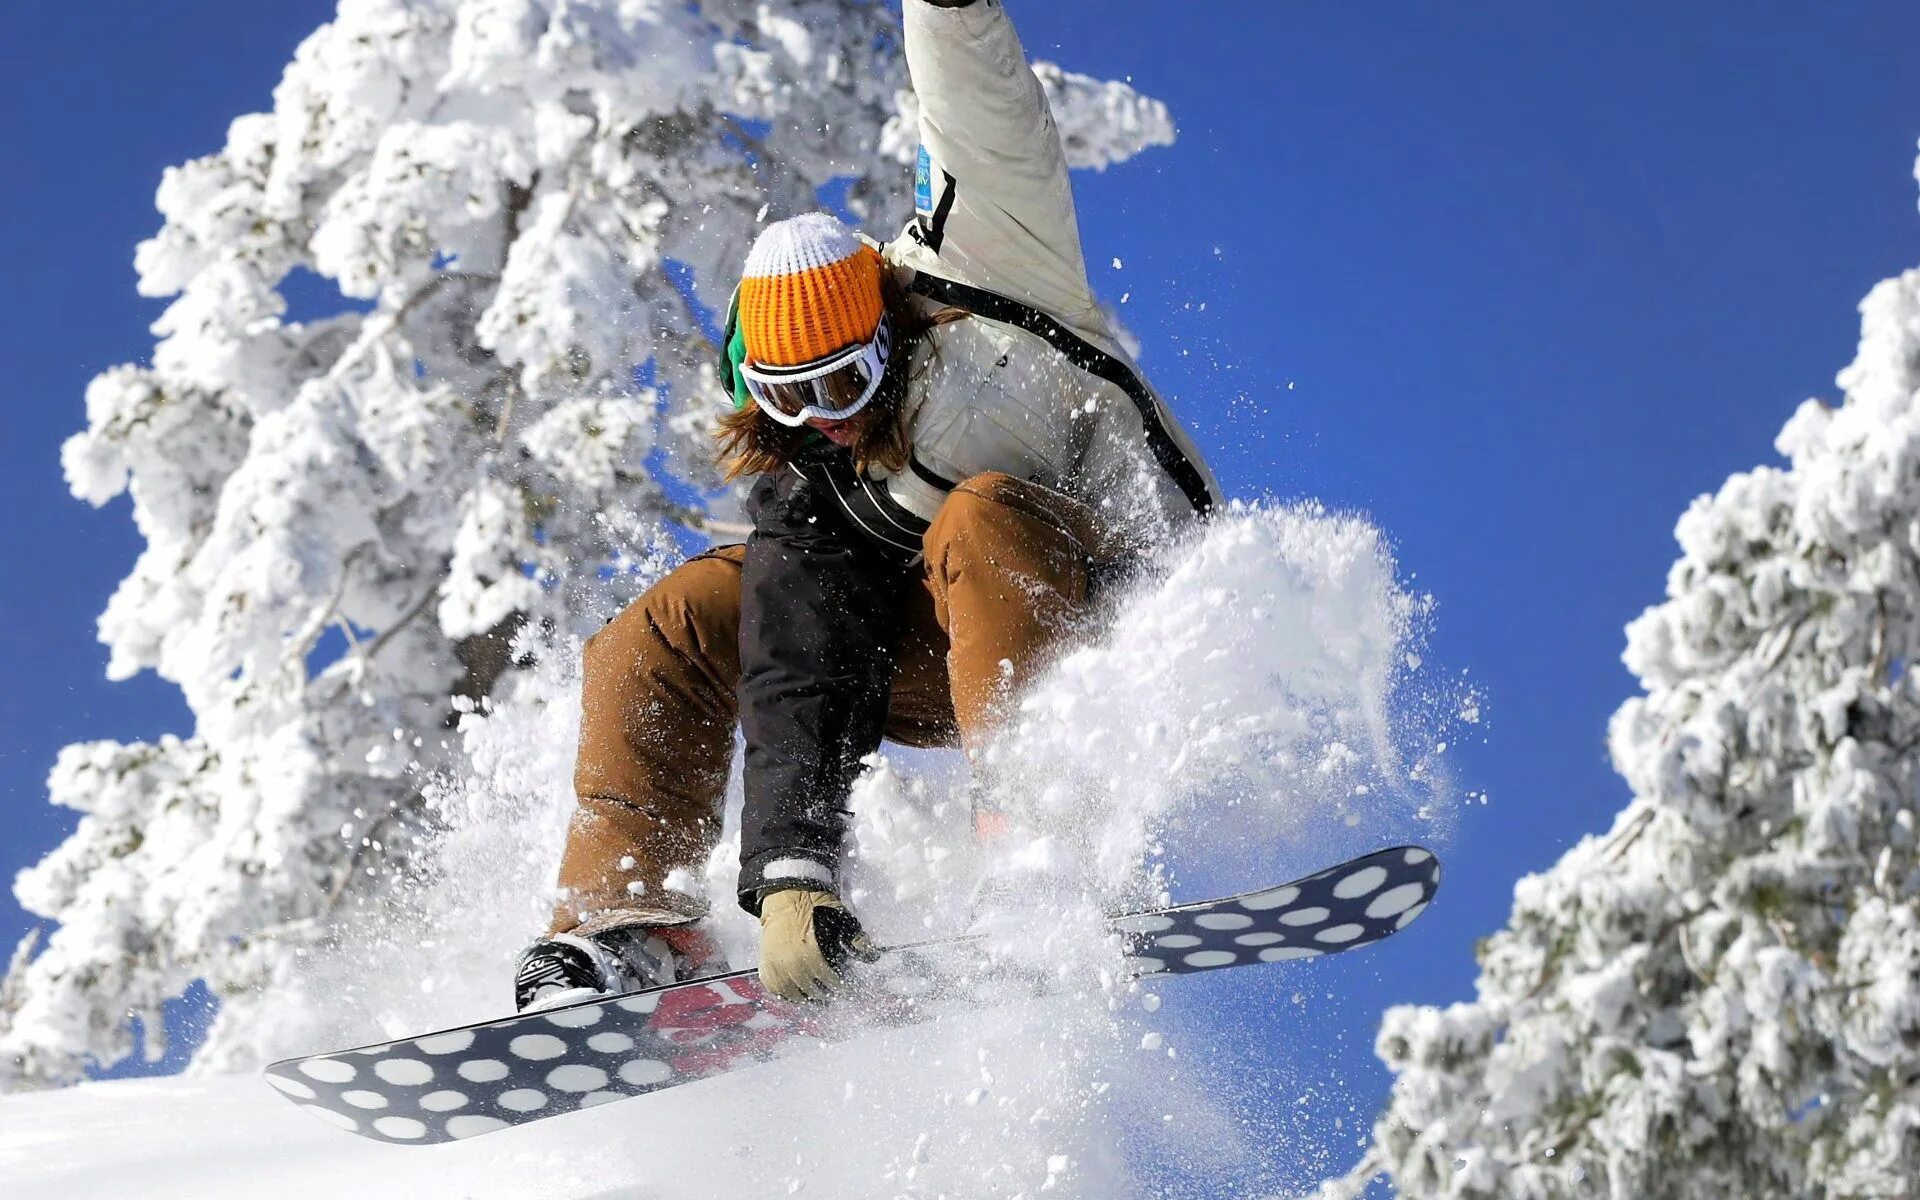 Зимние виды спорта. Спорт зимой. Сноуборд. Девушка на сноуборде. Snowboarding sport